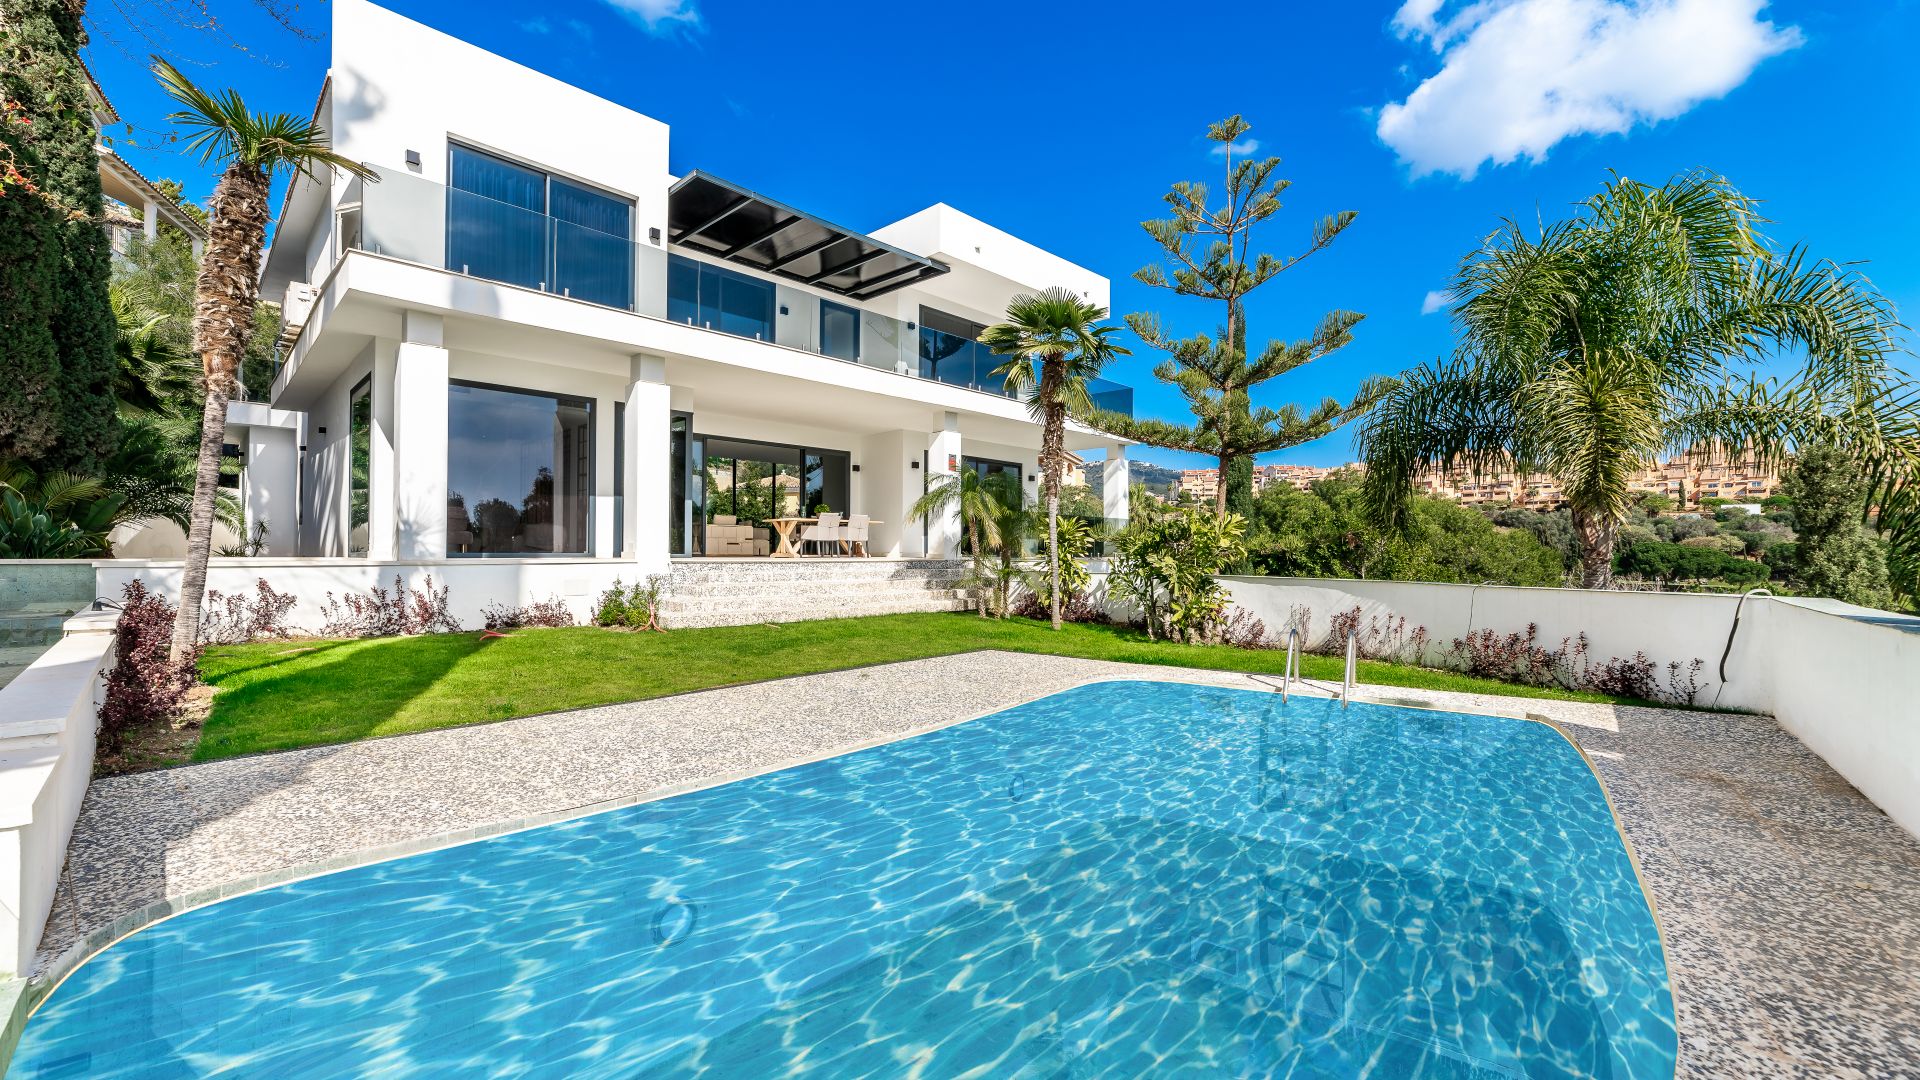 Brand new boutique villa with sea and golf views | Engel & Völkers Marbella